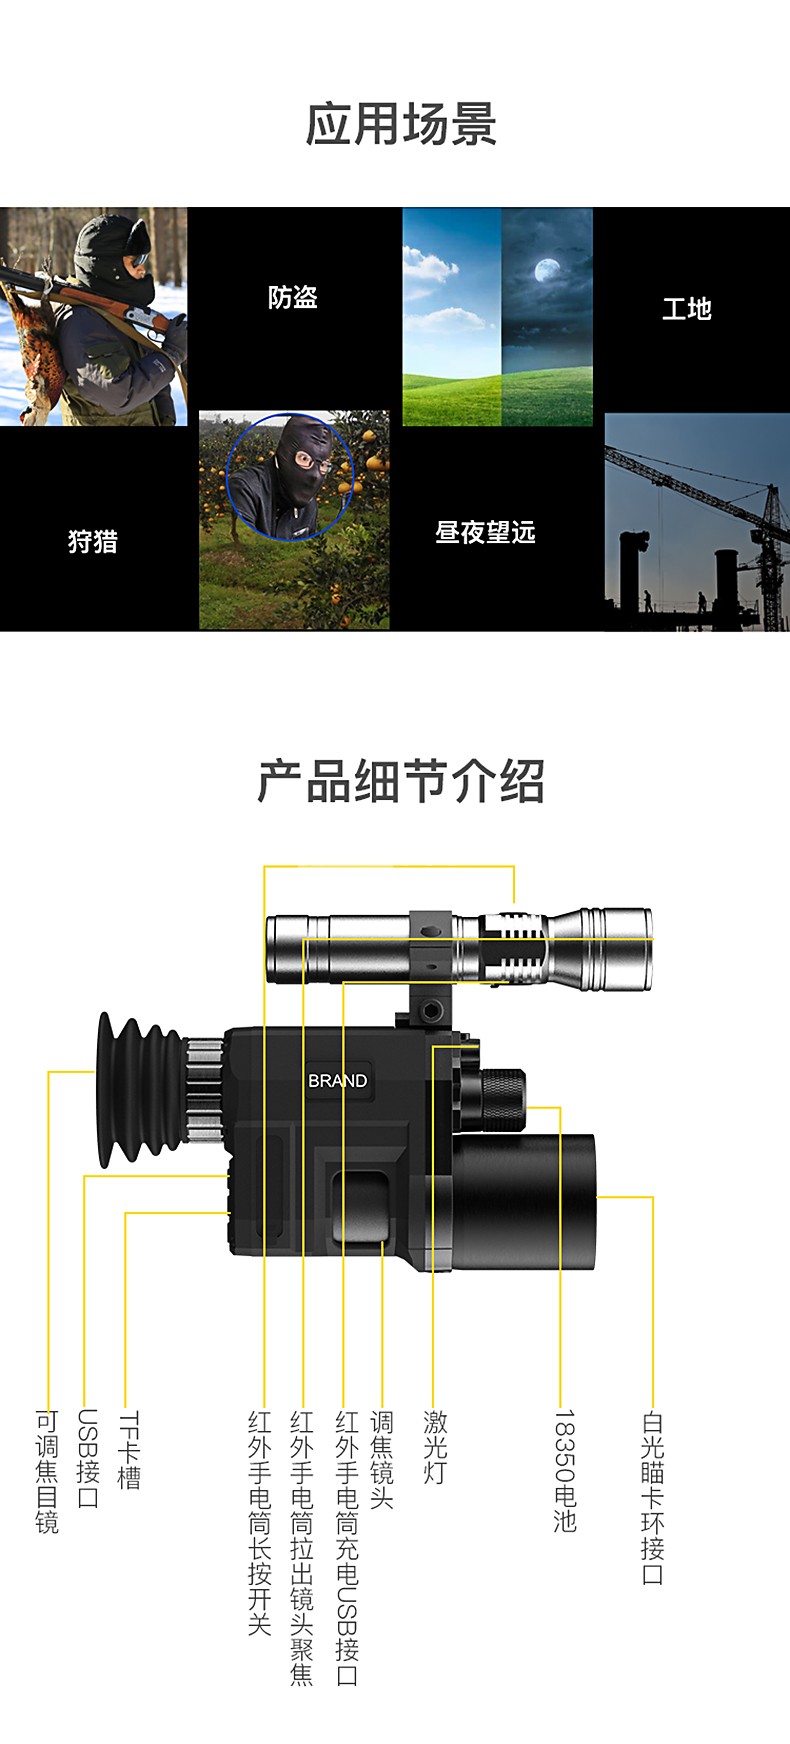 NV3000夜视瞄准镜 应用场景和细节介绍.jpg